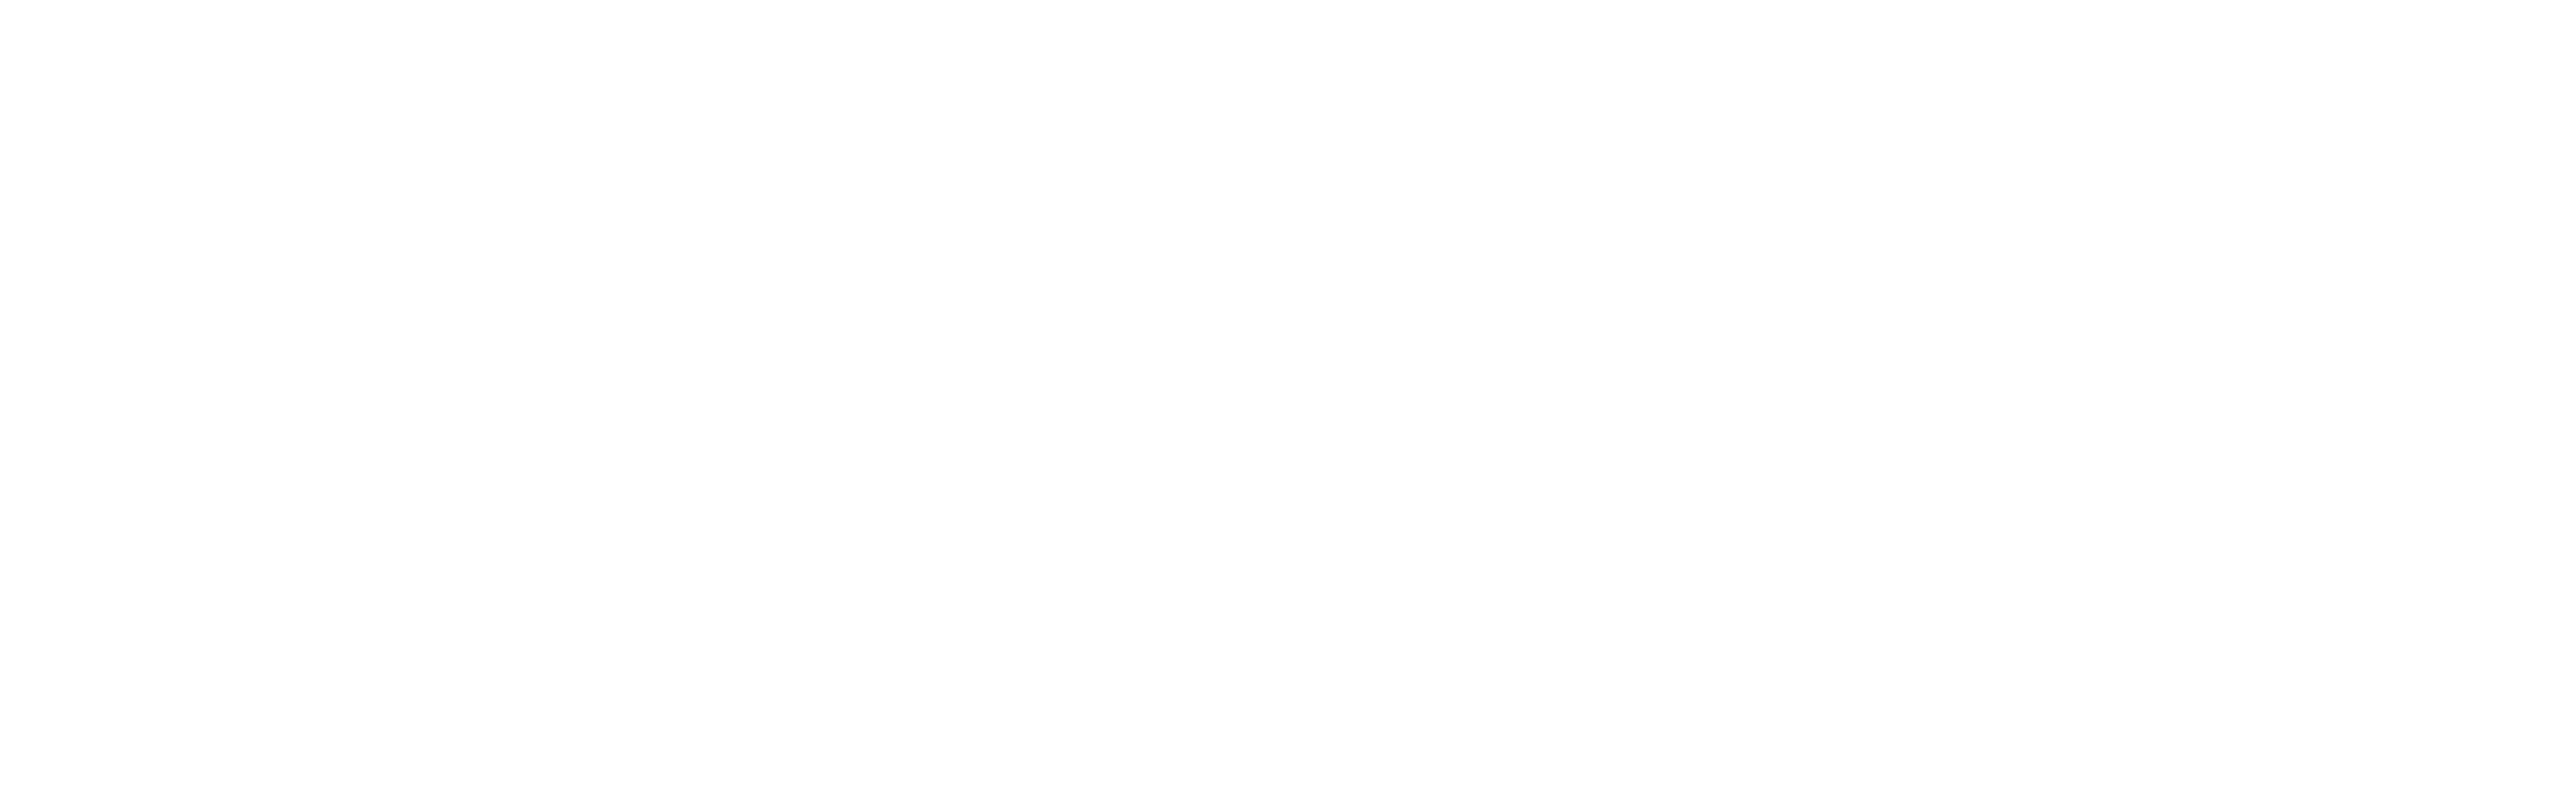 Trevor-Barber-Initials_white_high-res